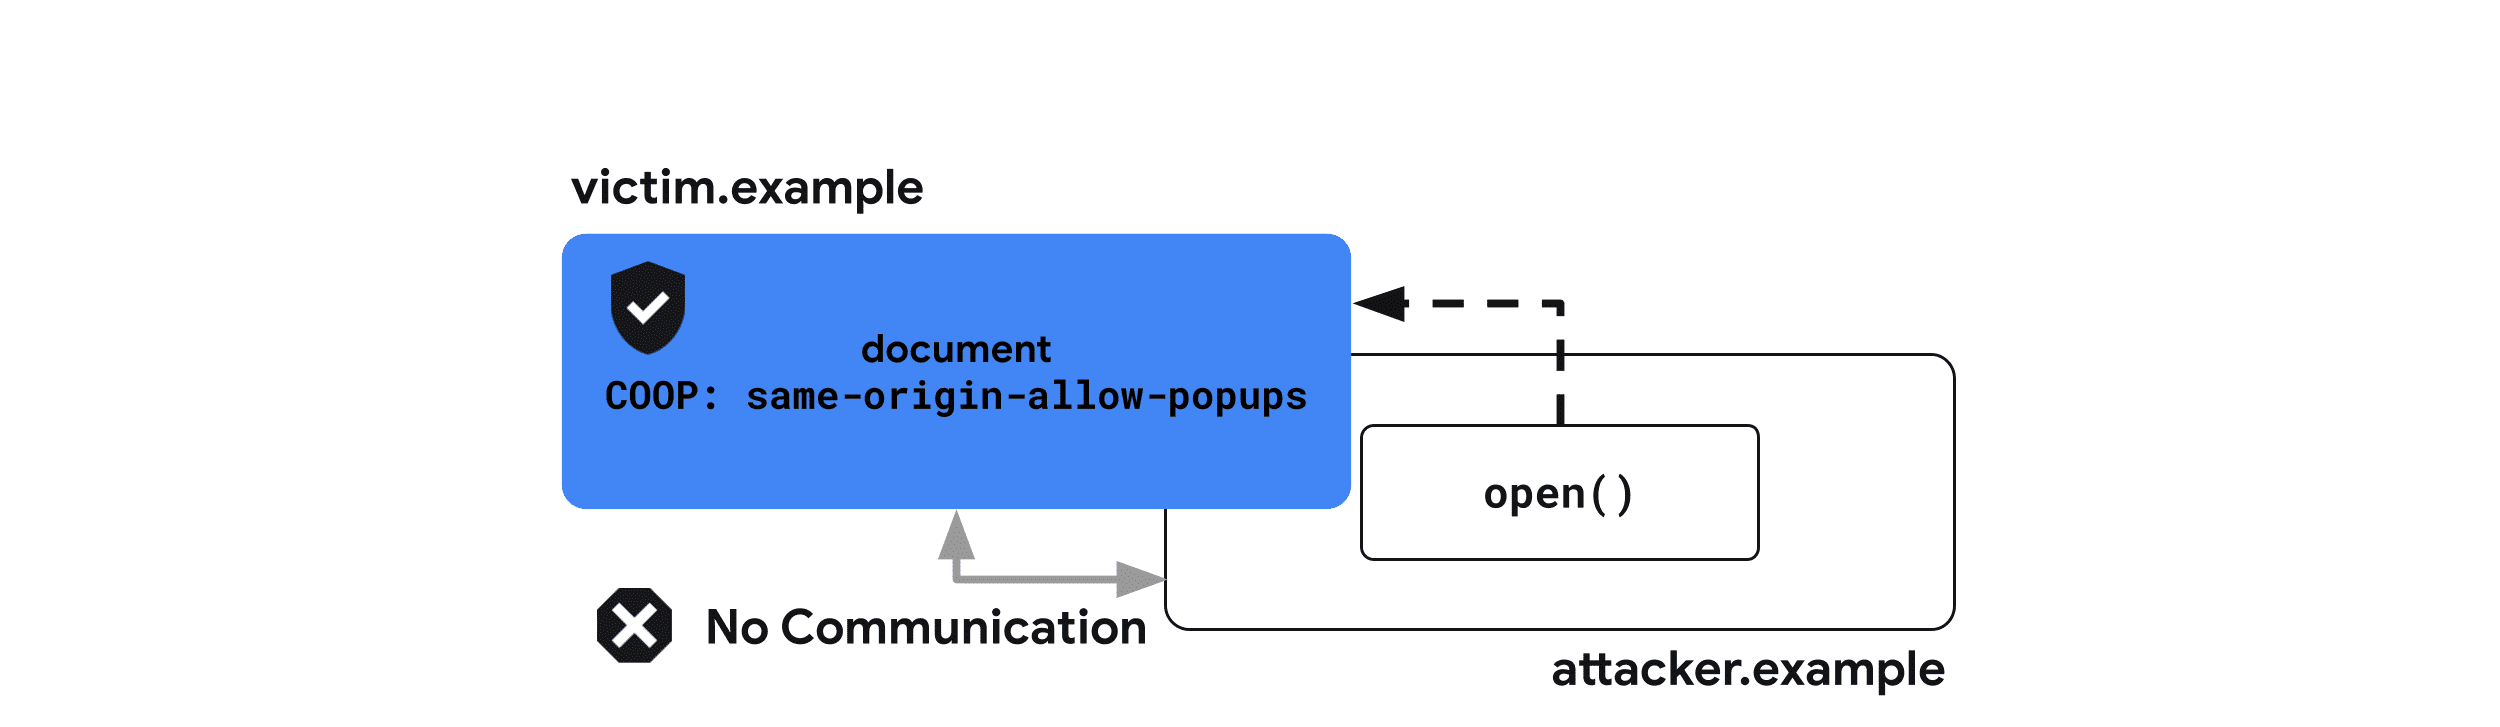 Criteri di apertura multiorigine: same-origin-allow-popups